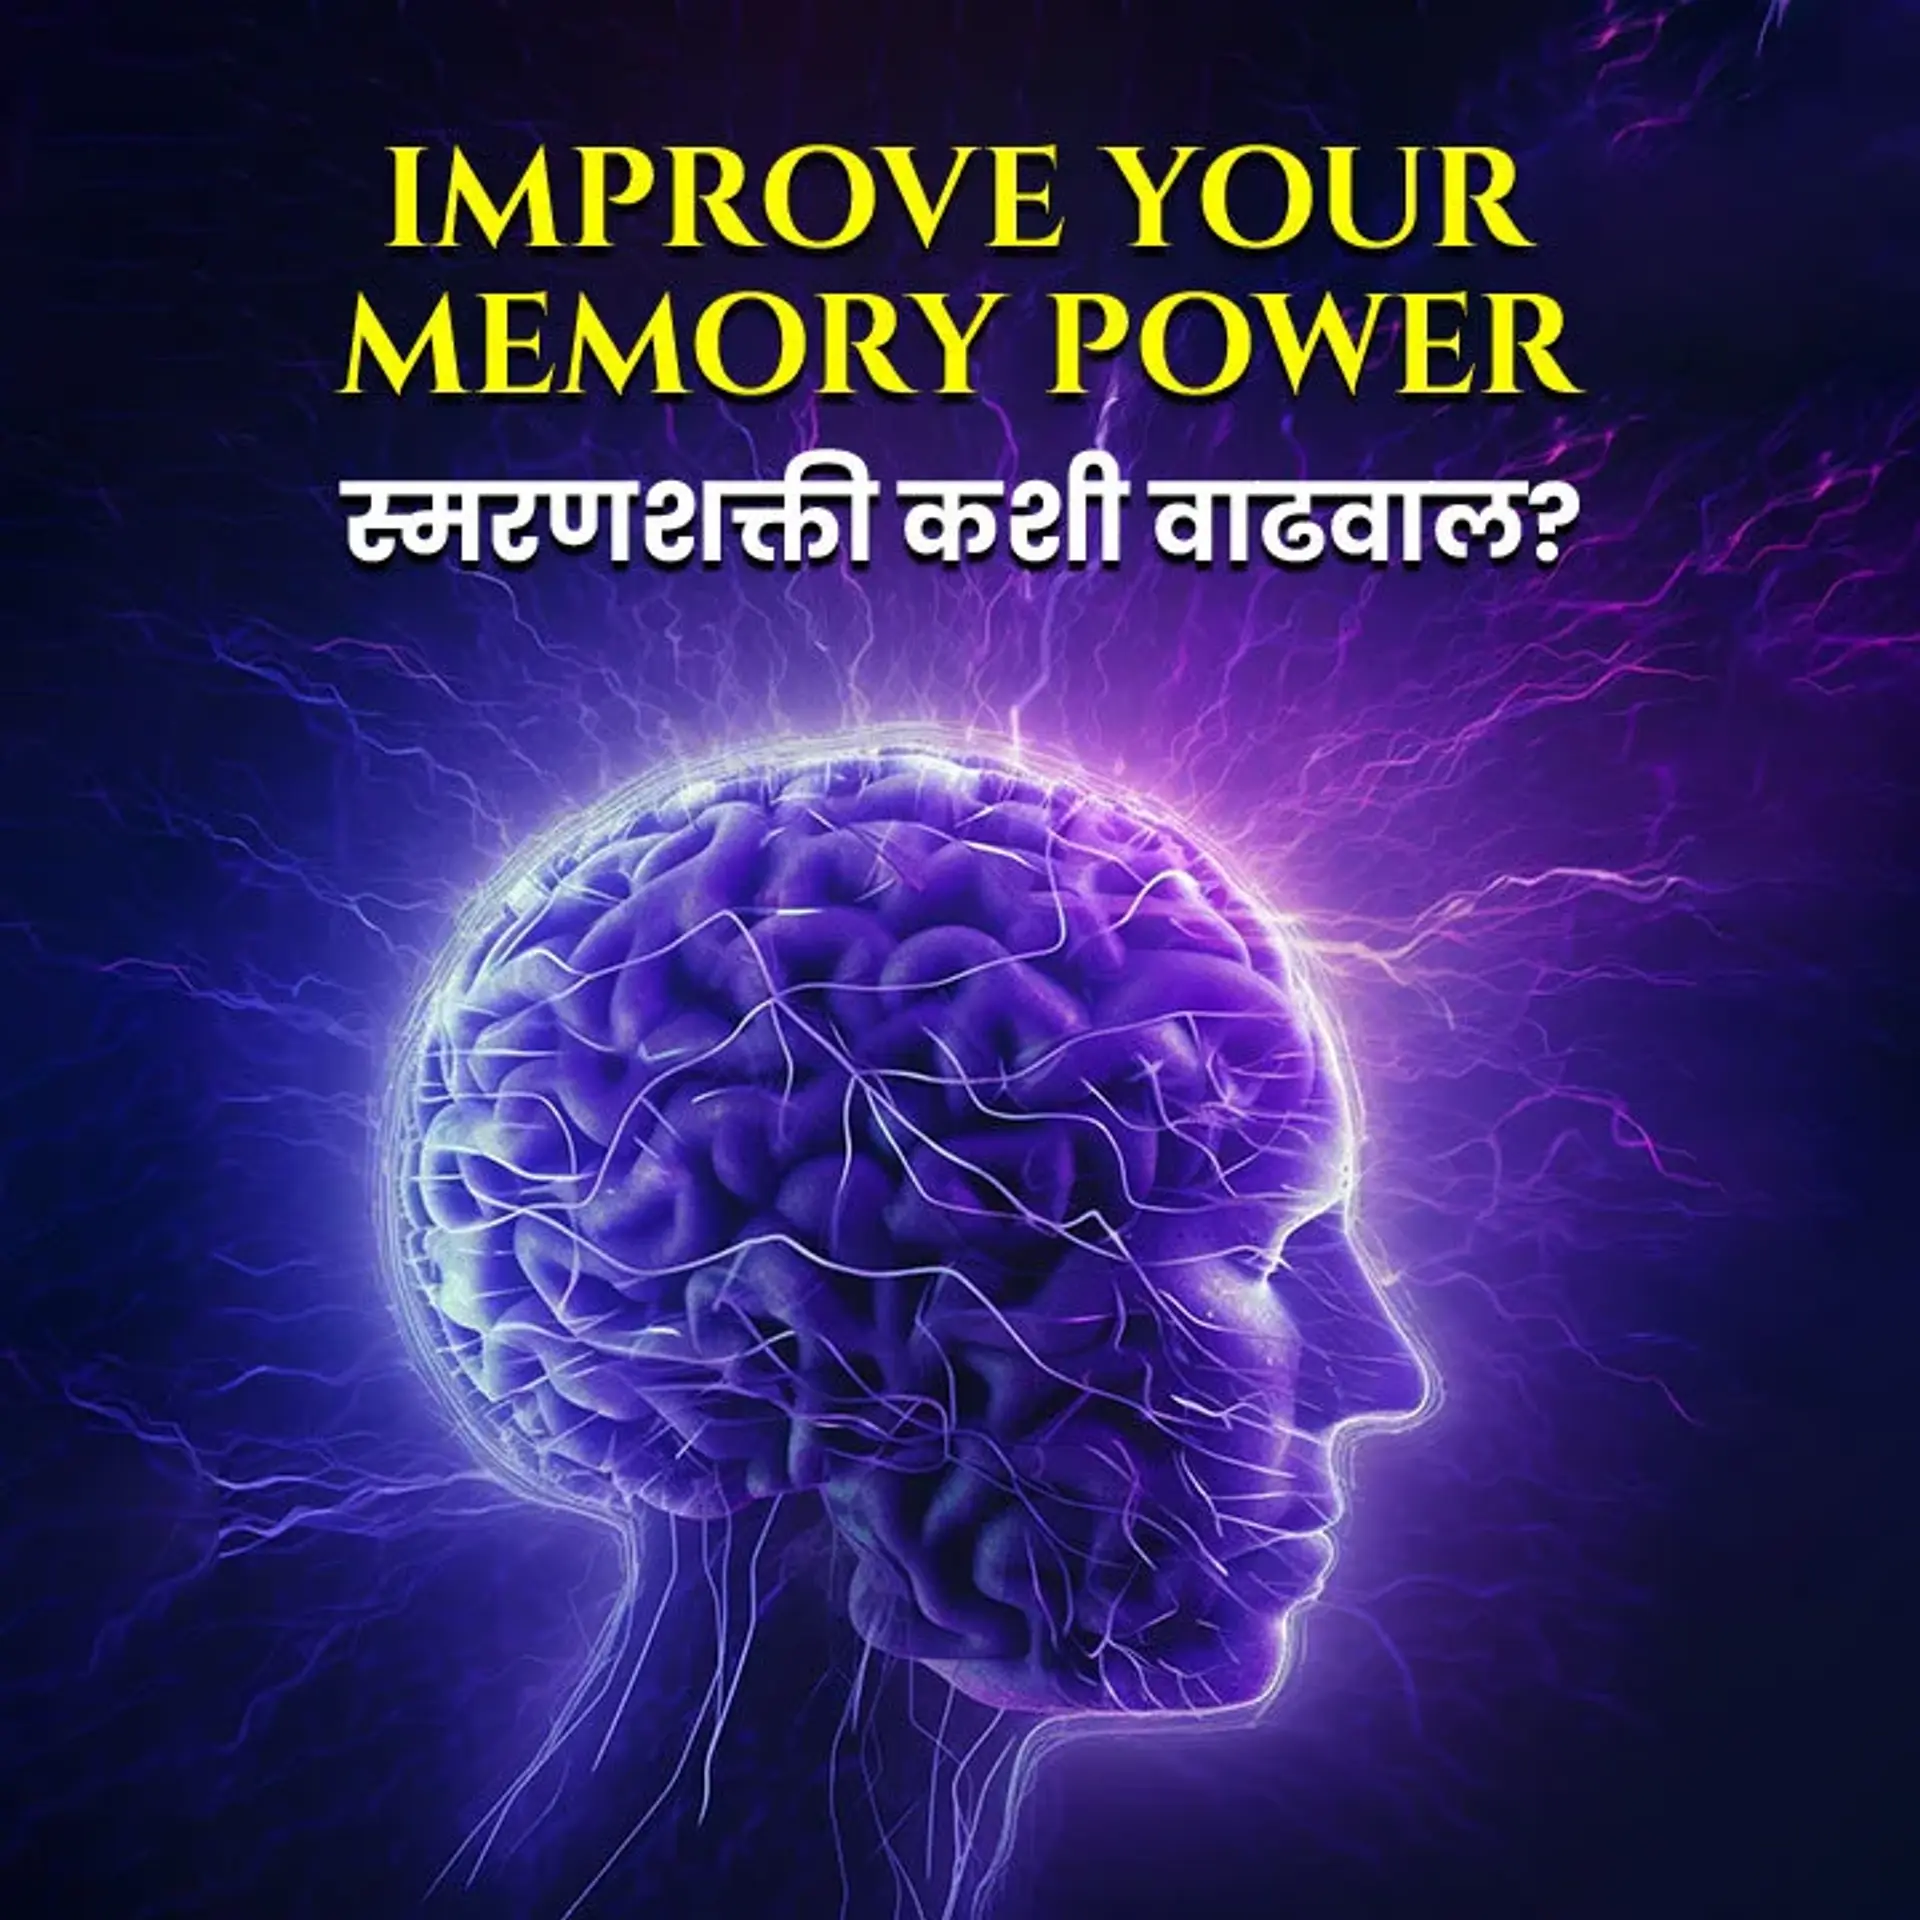 1. Memory Power kashi wadhwal? | 